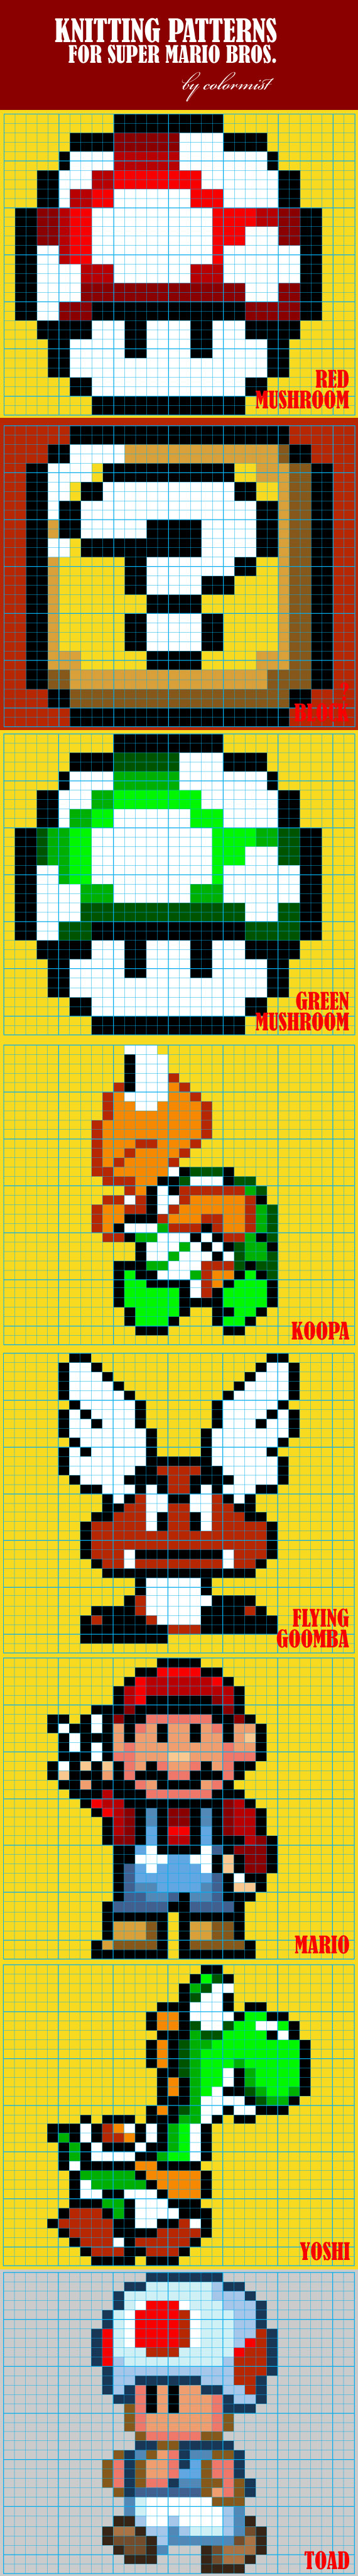 Super Mario Cross Stitch and knitting Patterns